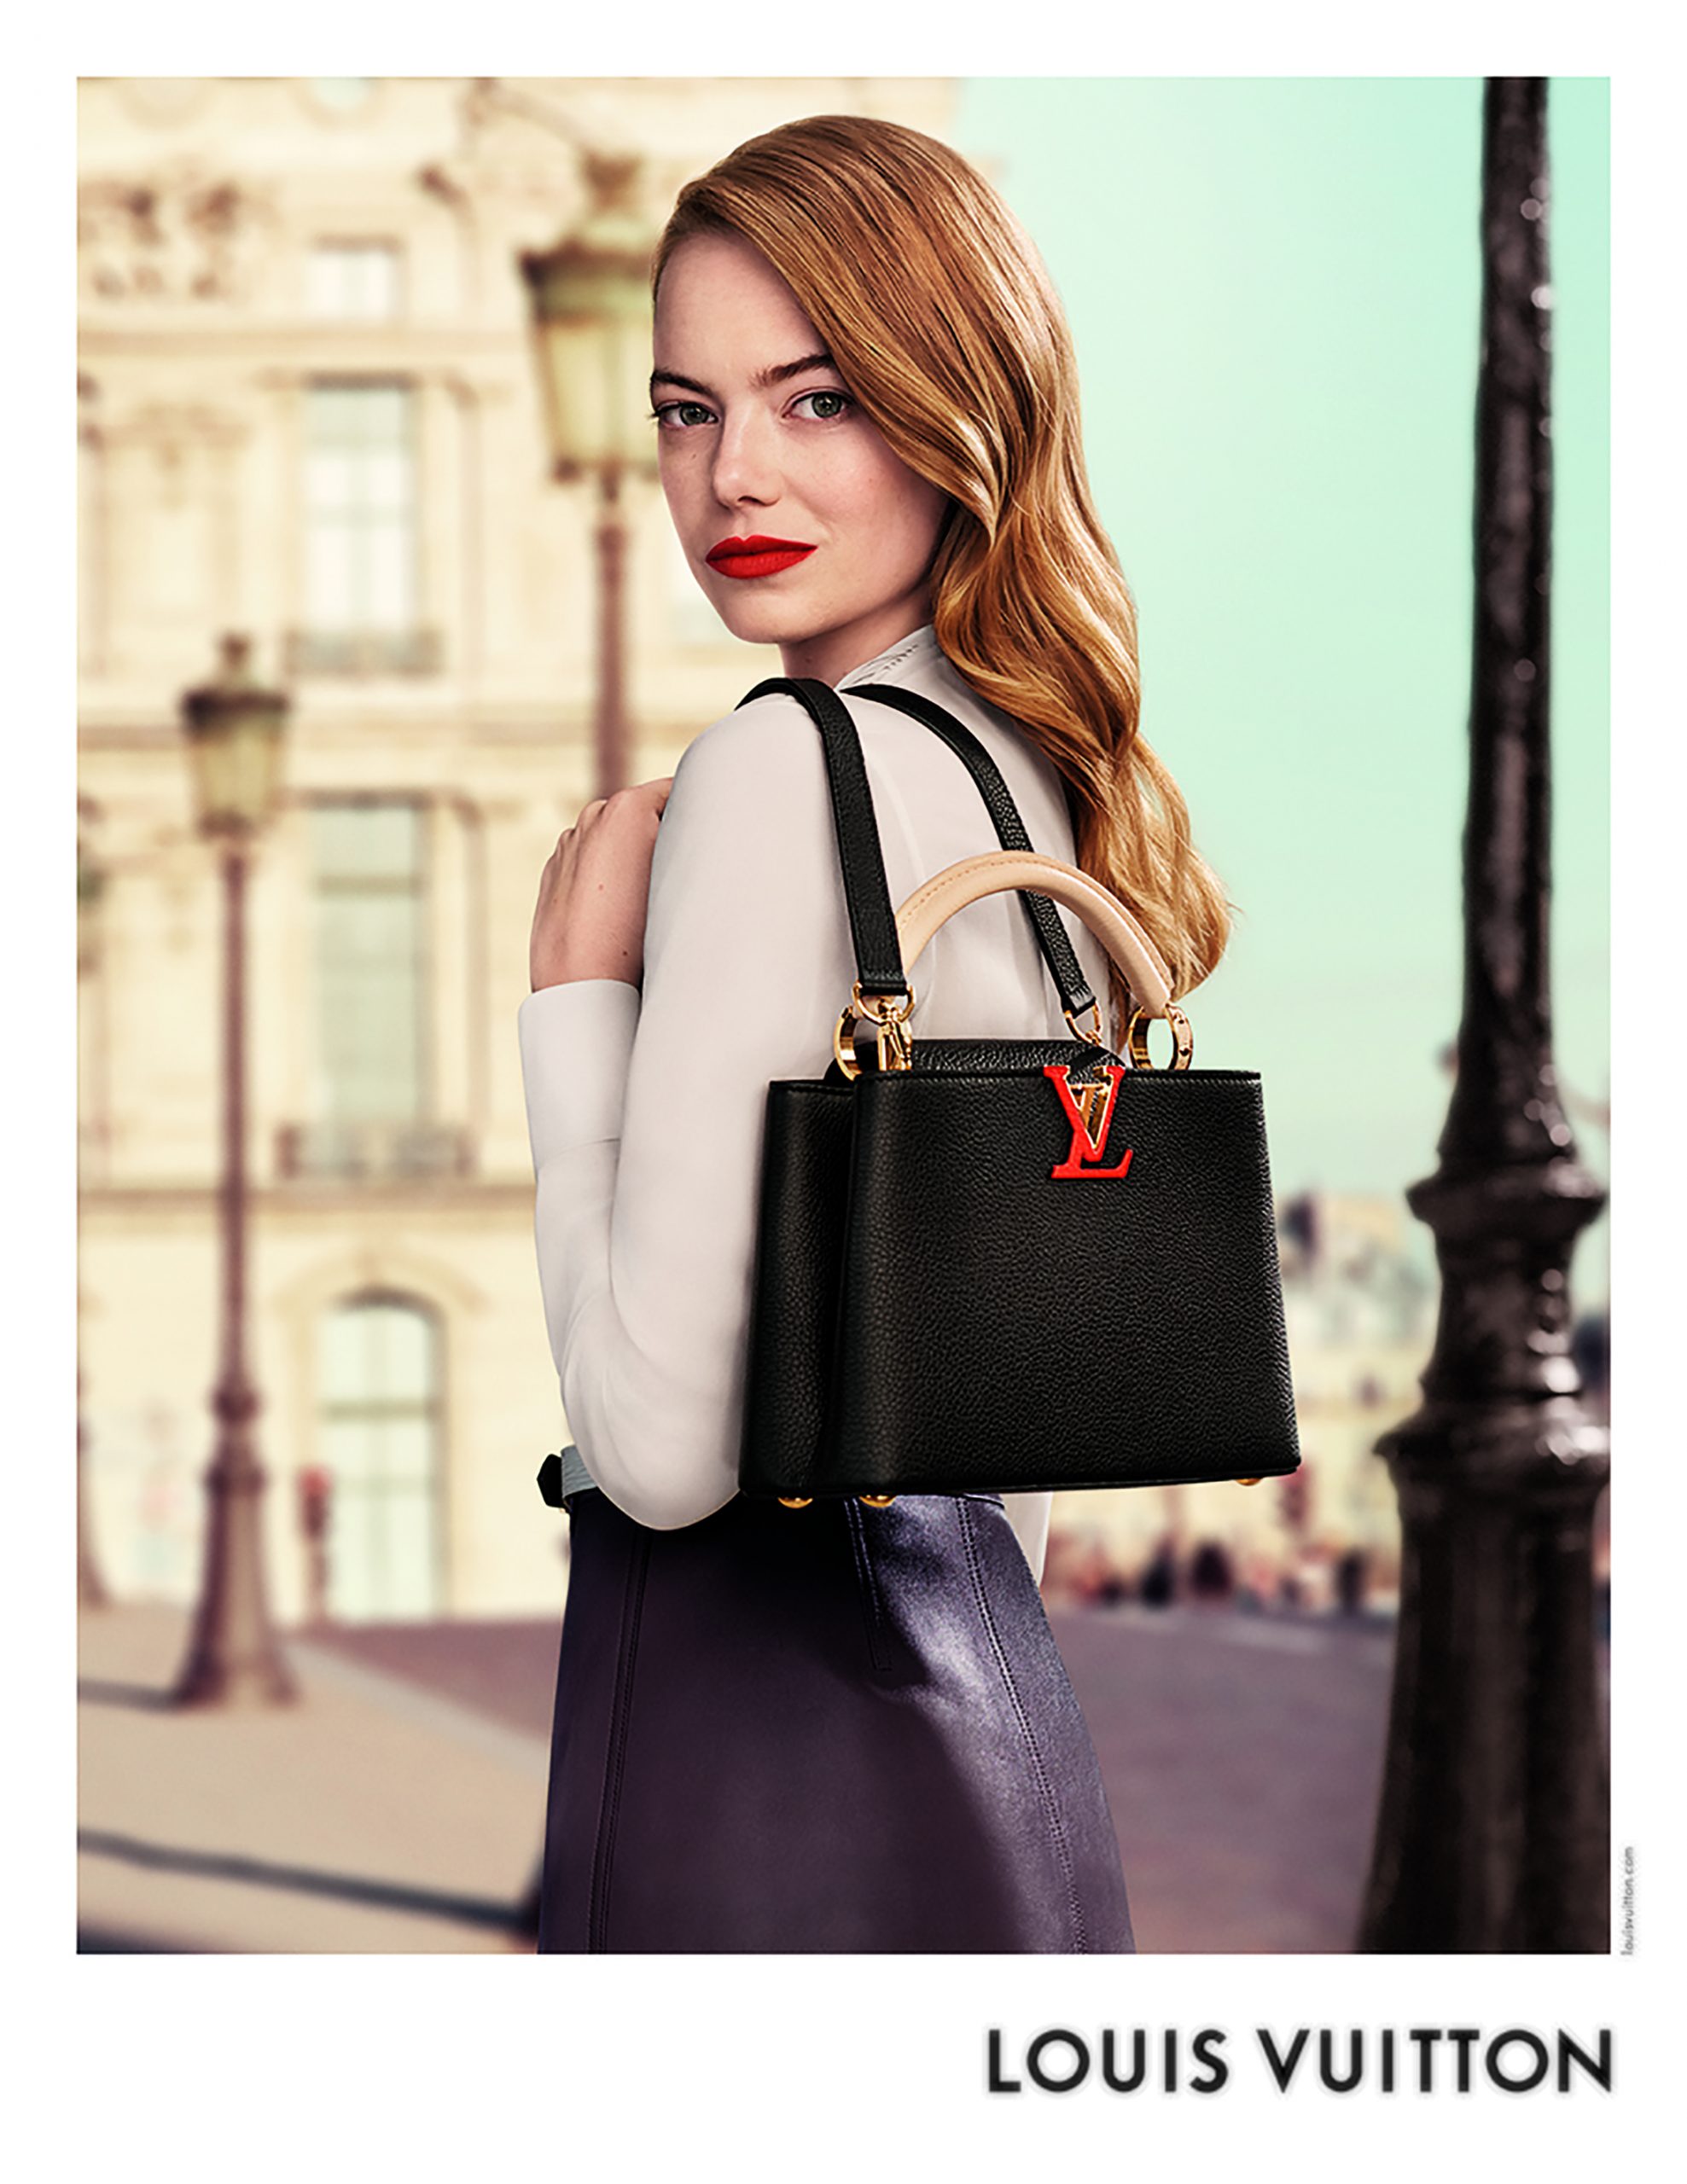 Louis Vuitton Capucines Spring 2020 Campaign